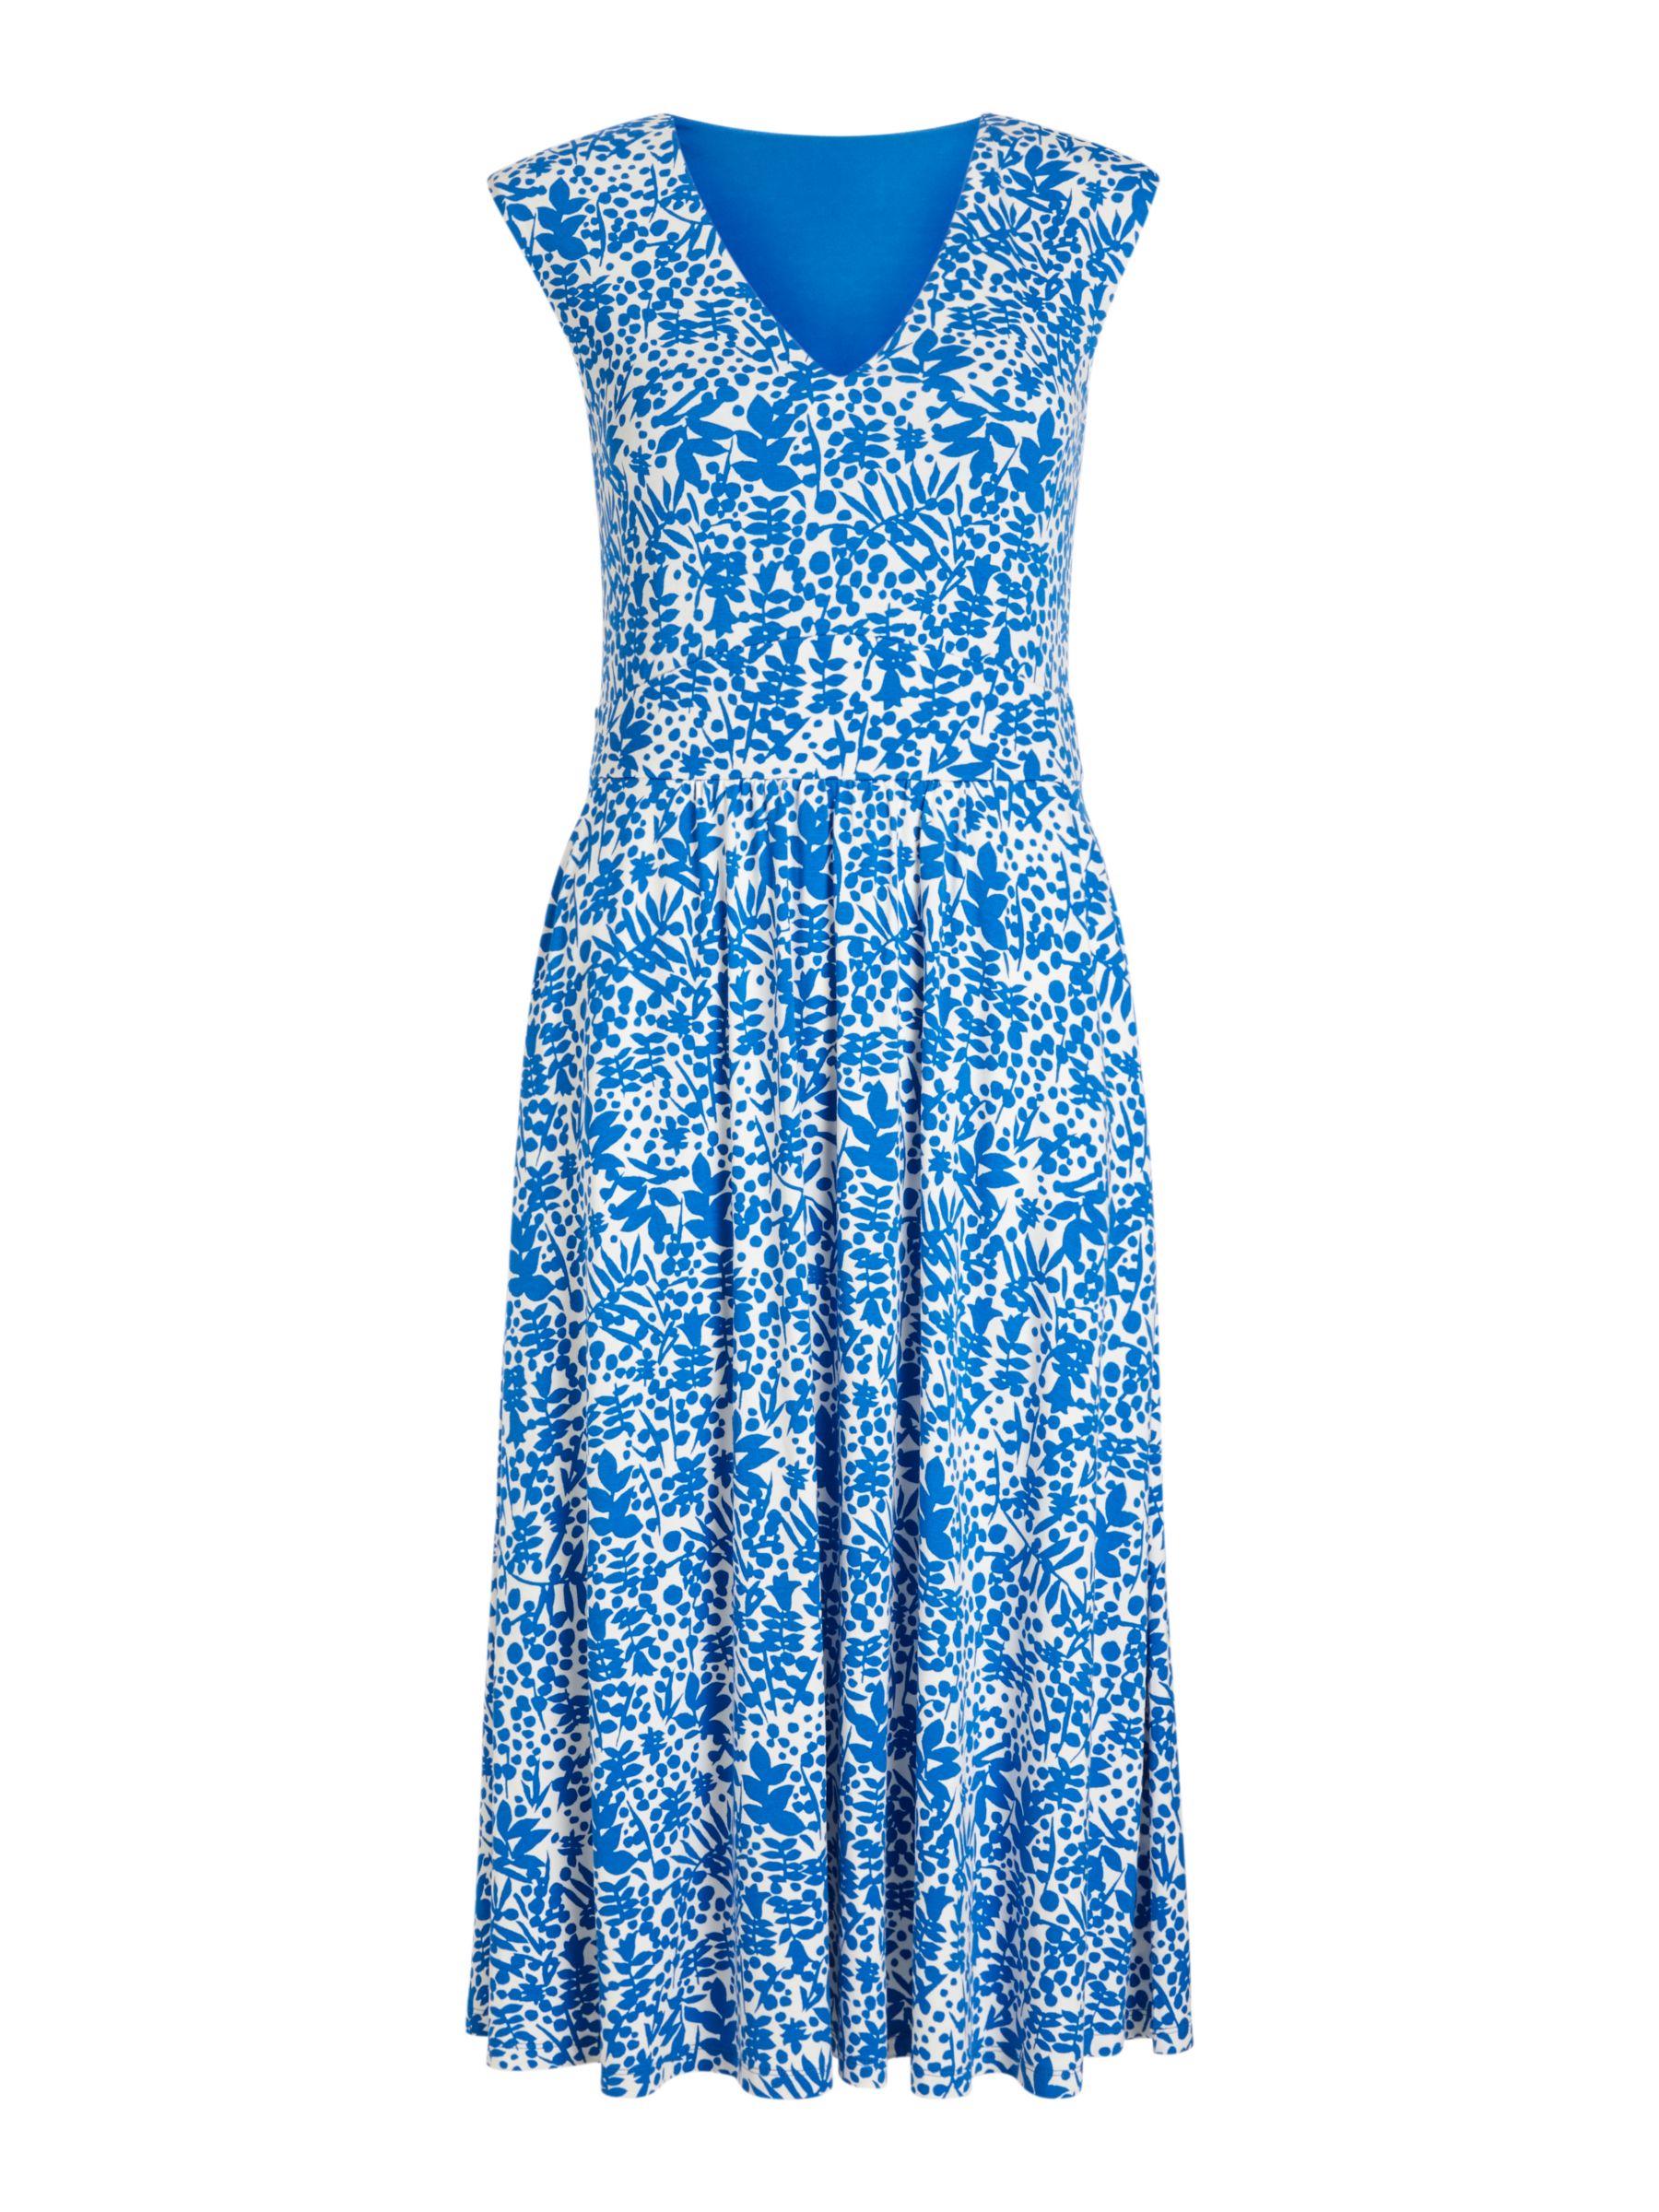 Boden Odilie Floral Jersey Dress, Blue/White at John Lewis & Partners